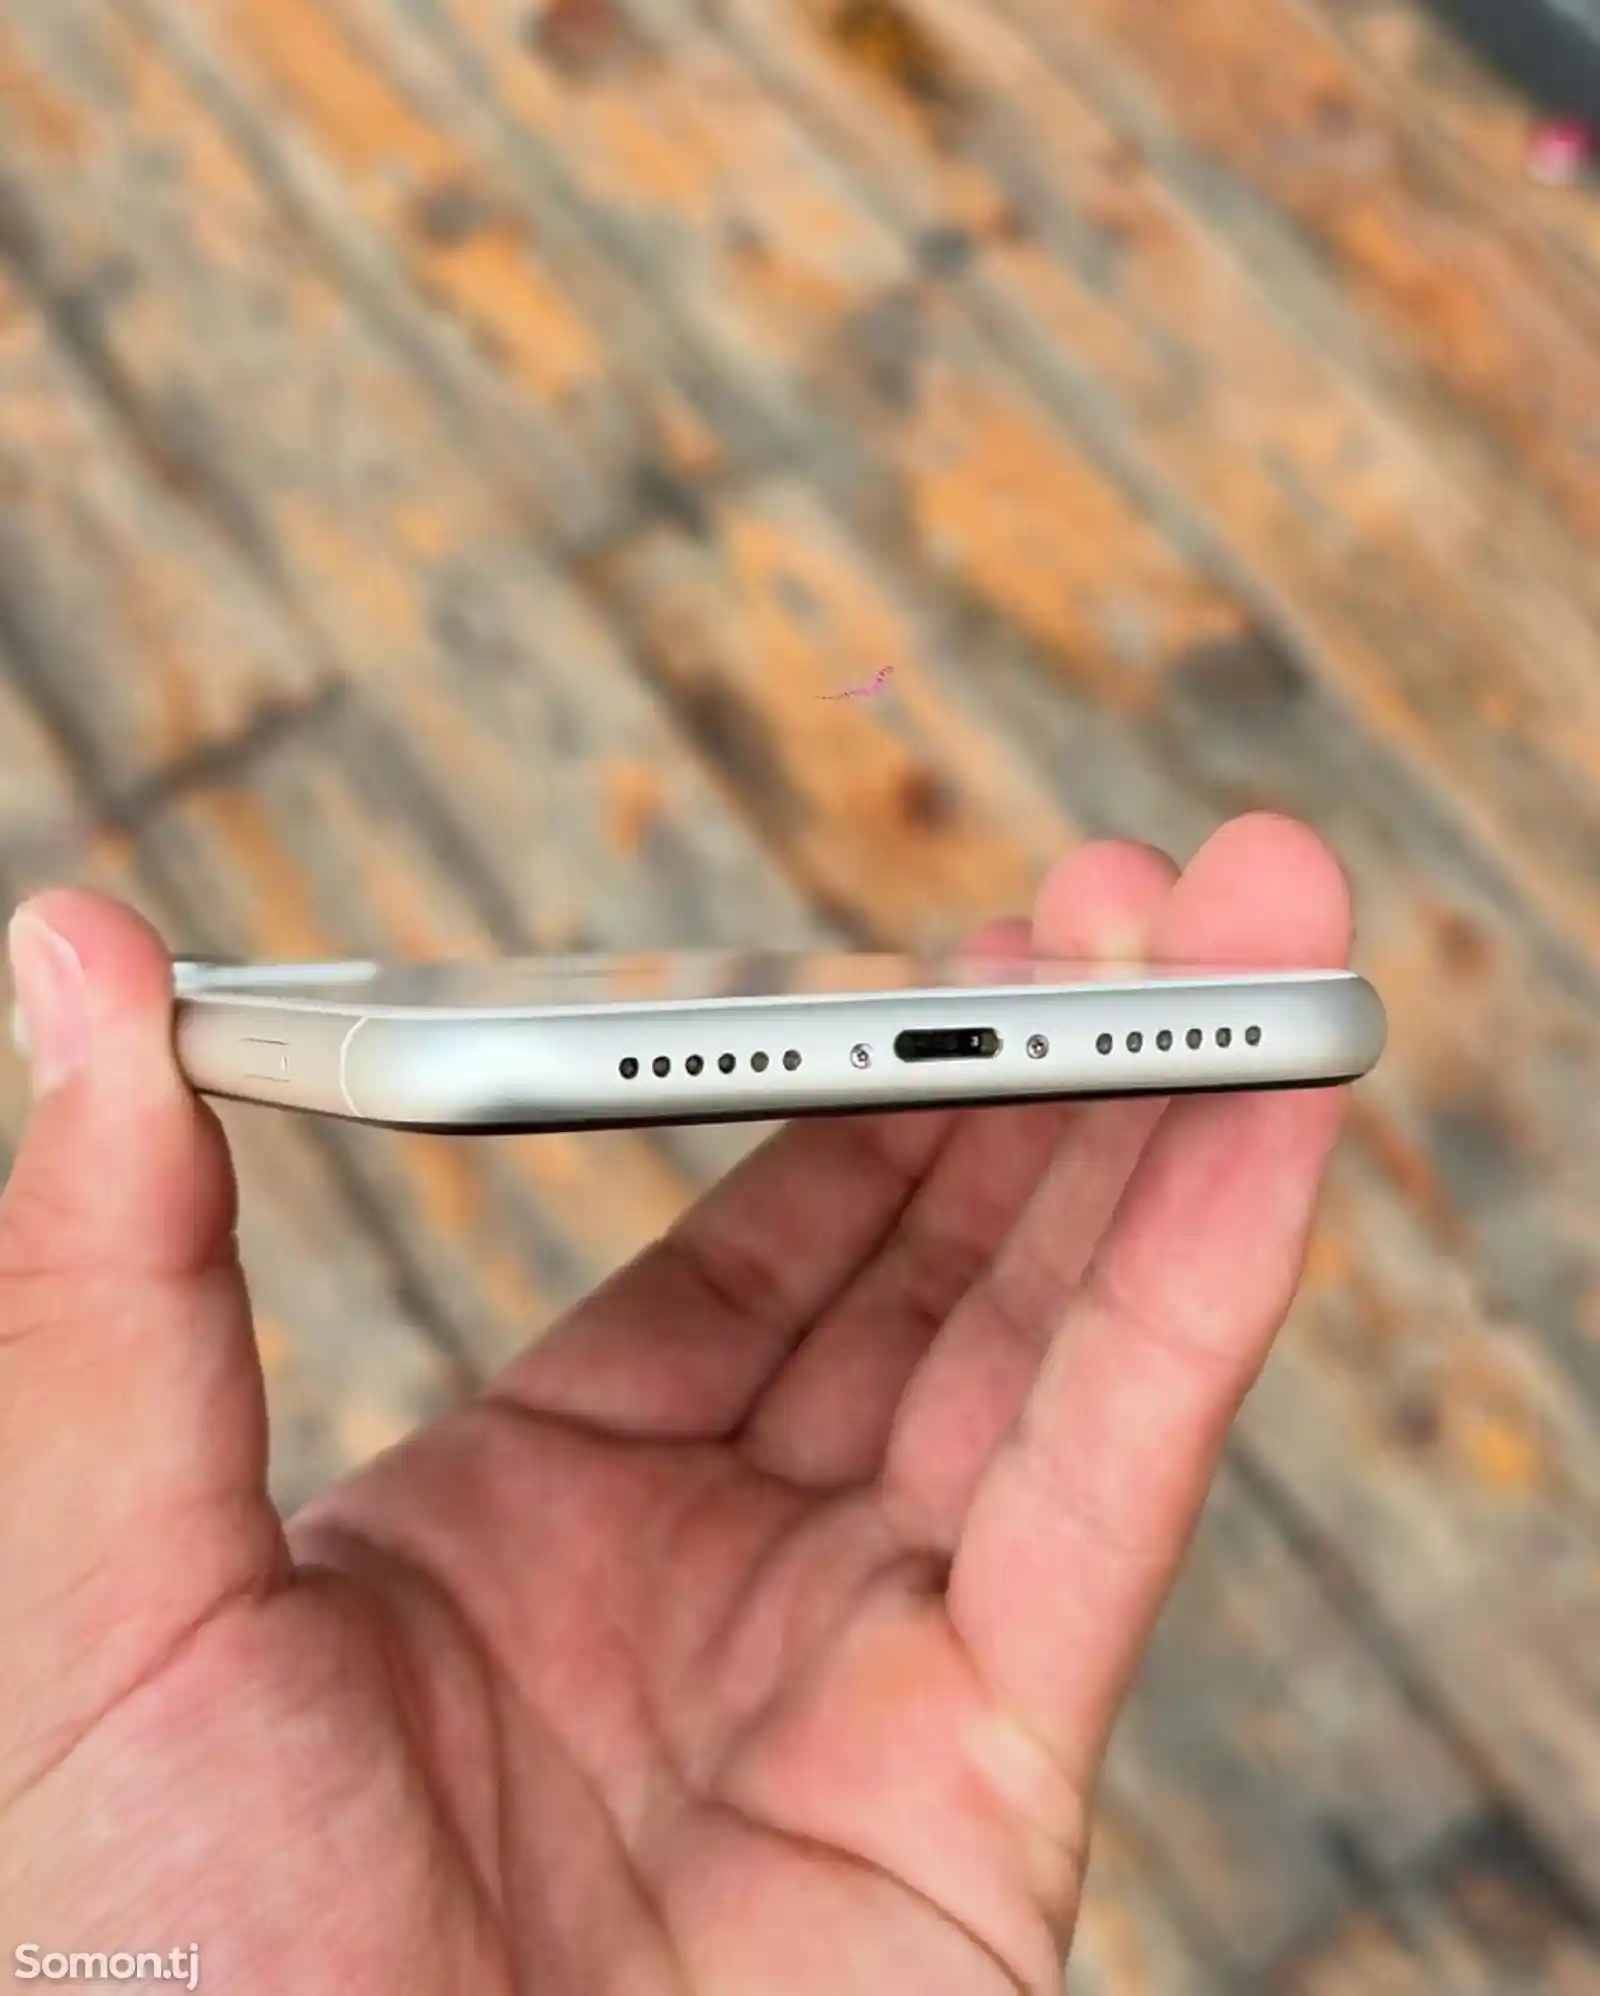 Apple iPhone 11, 128 gb, White-7